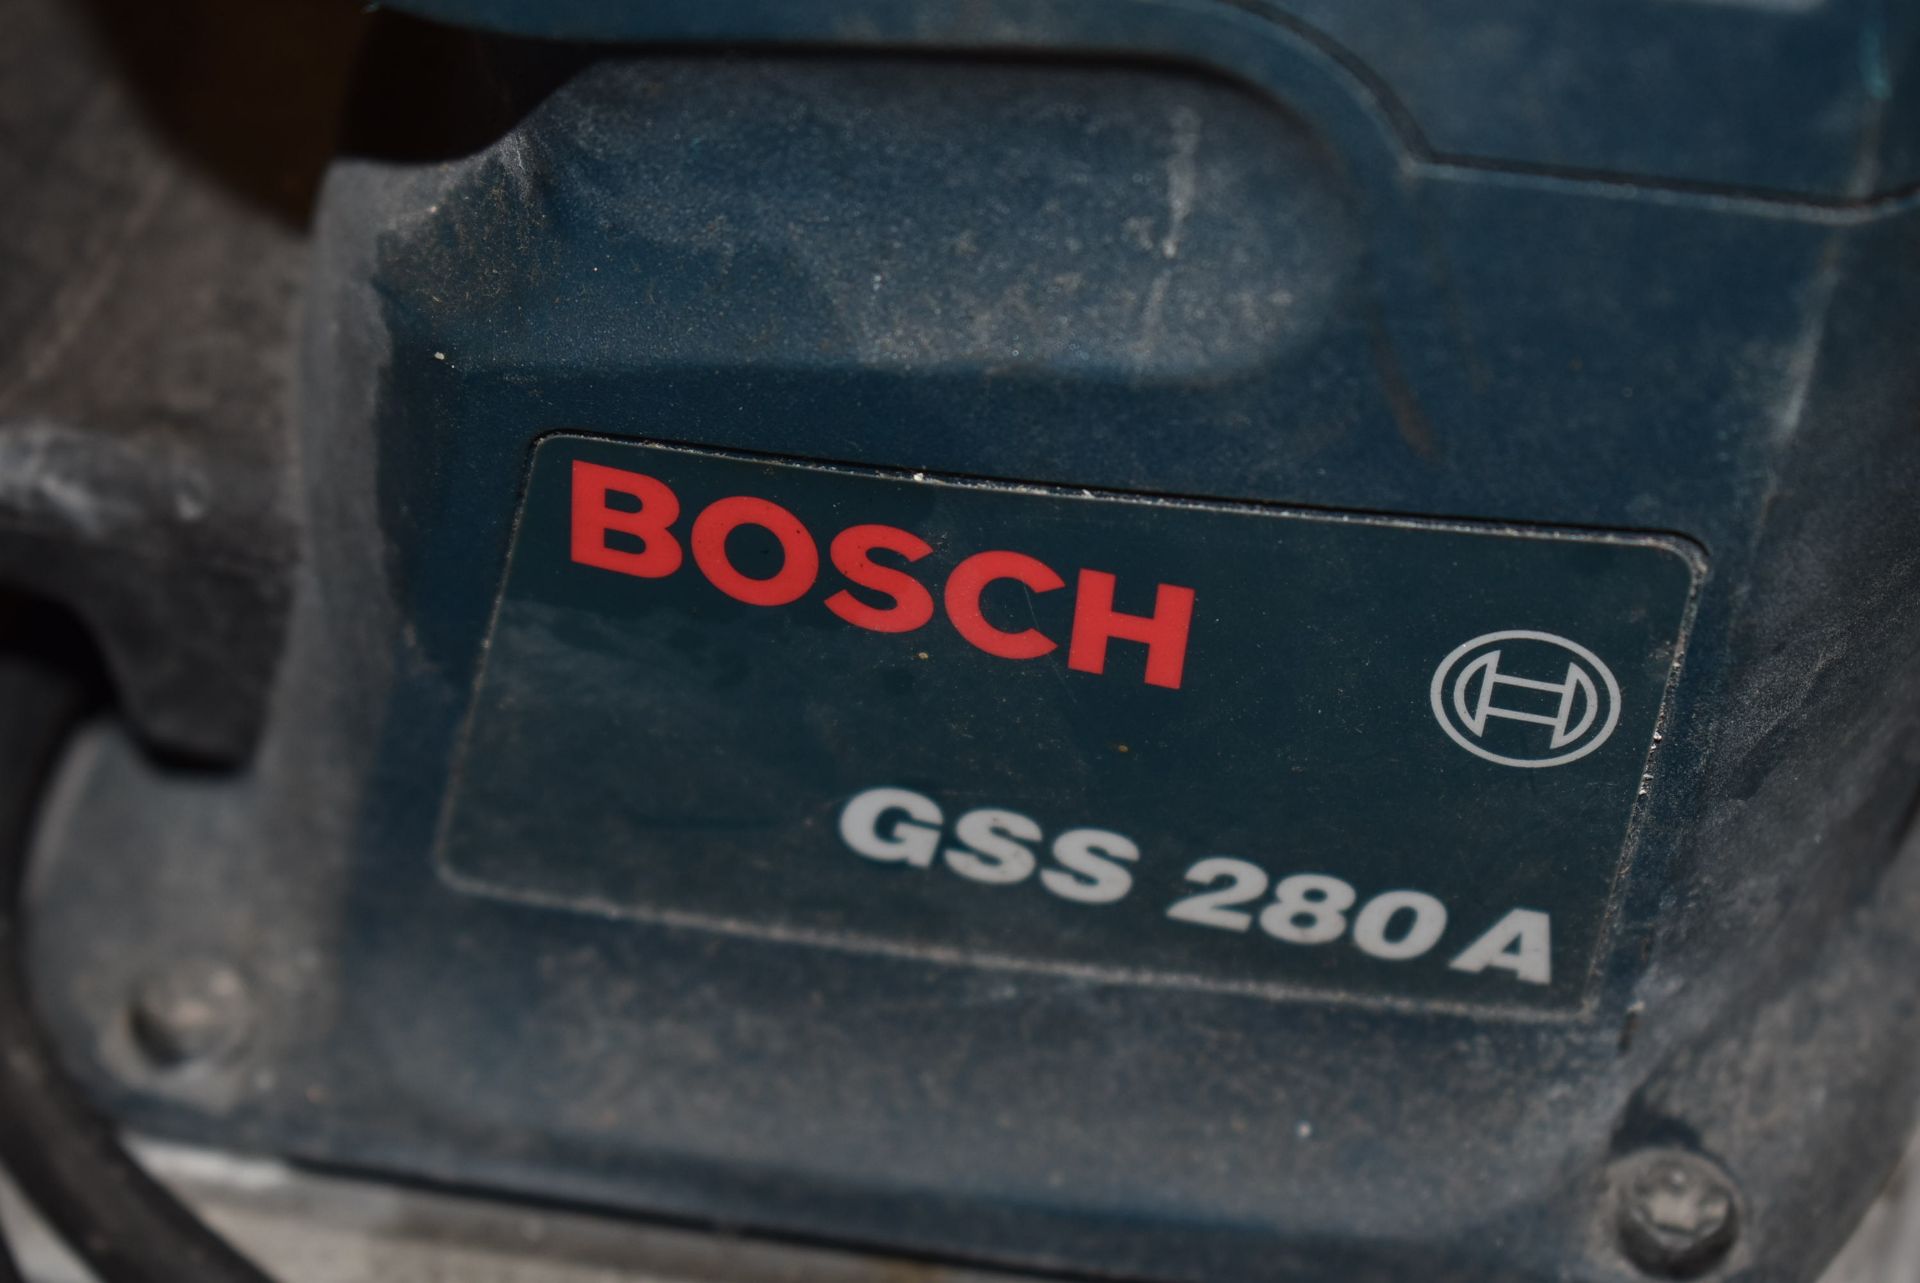 Bosch GSS280A Sander and a Black & Decker Sander - Image 3 of 3